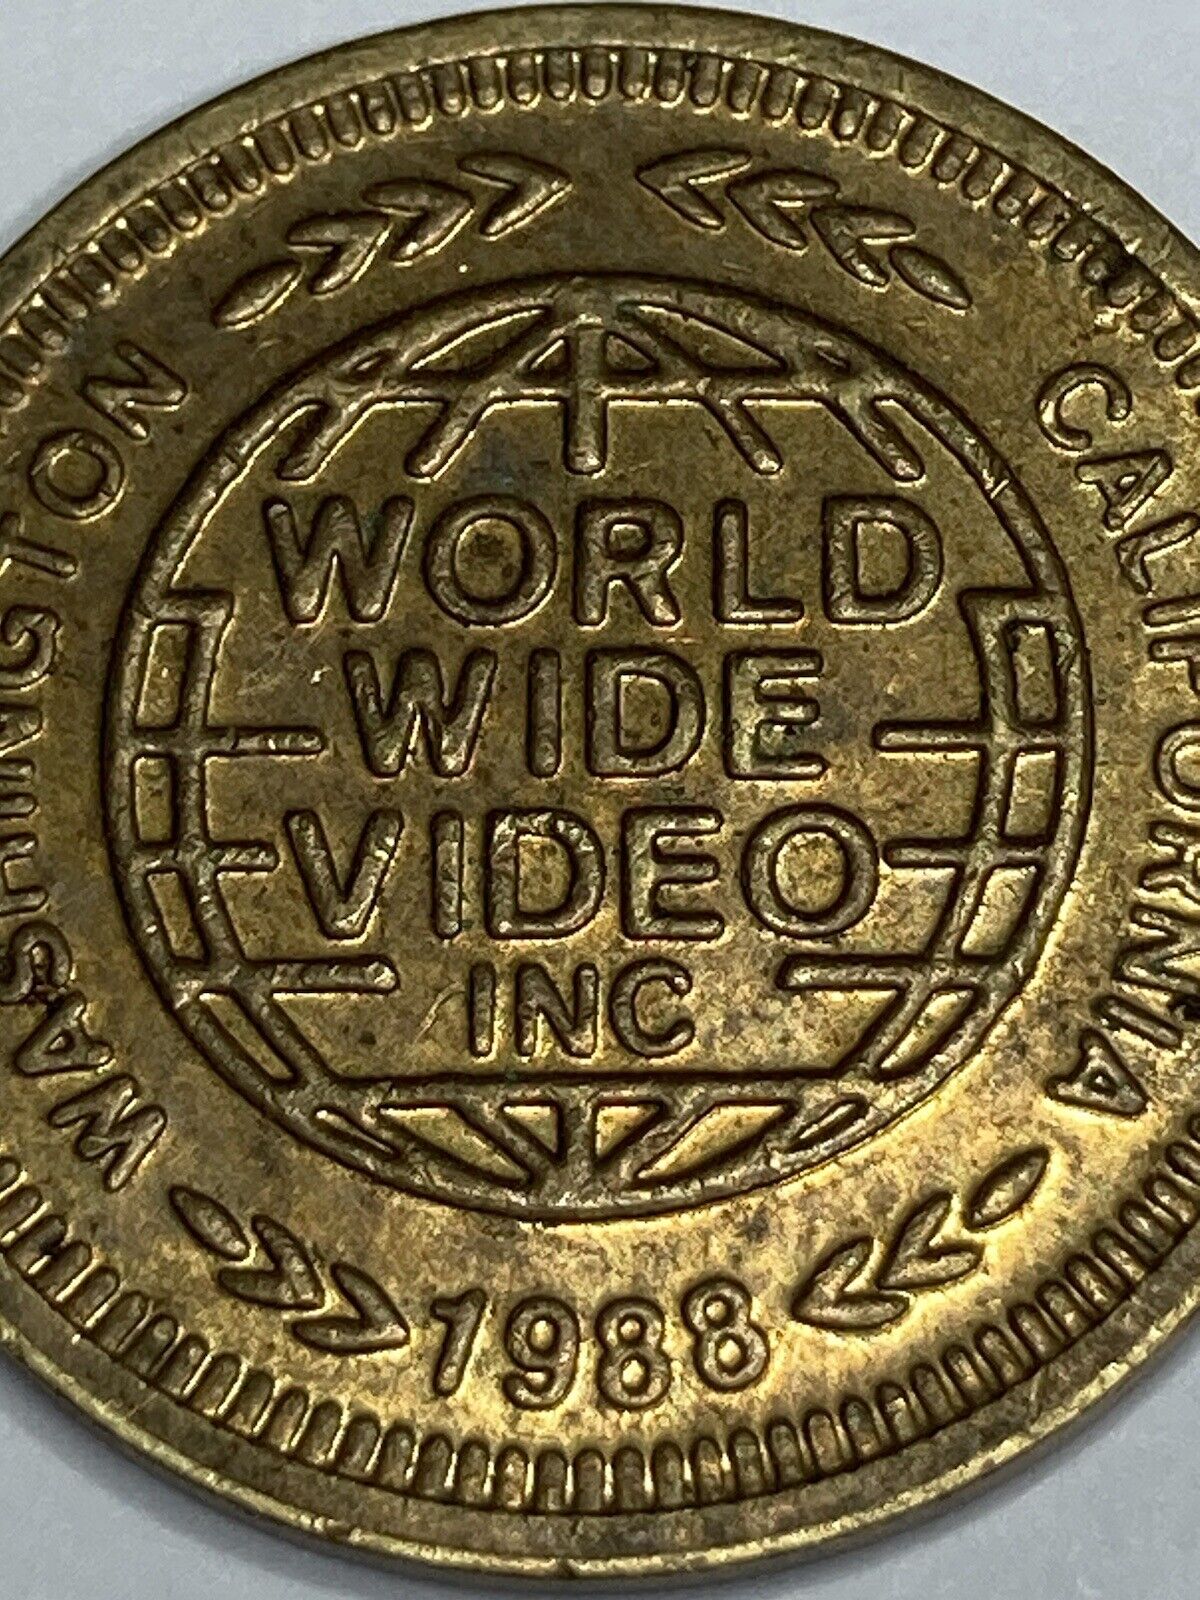 1988 World Wide Video Inc Arcade Token Washington California #qj1